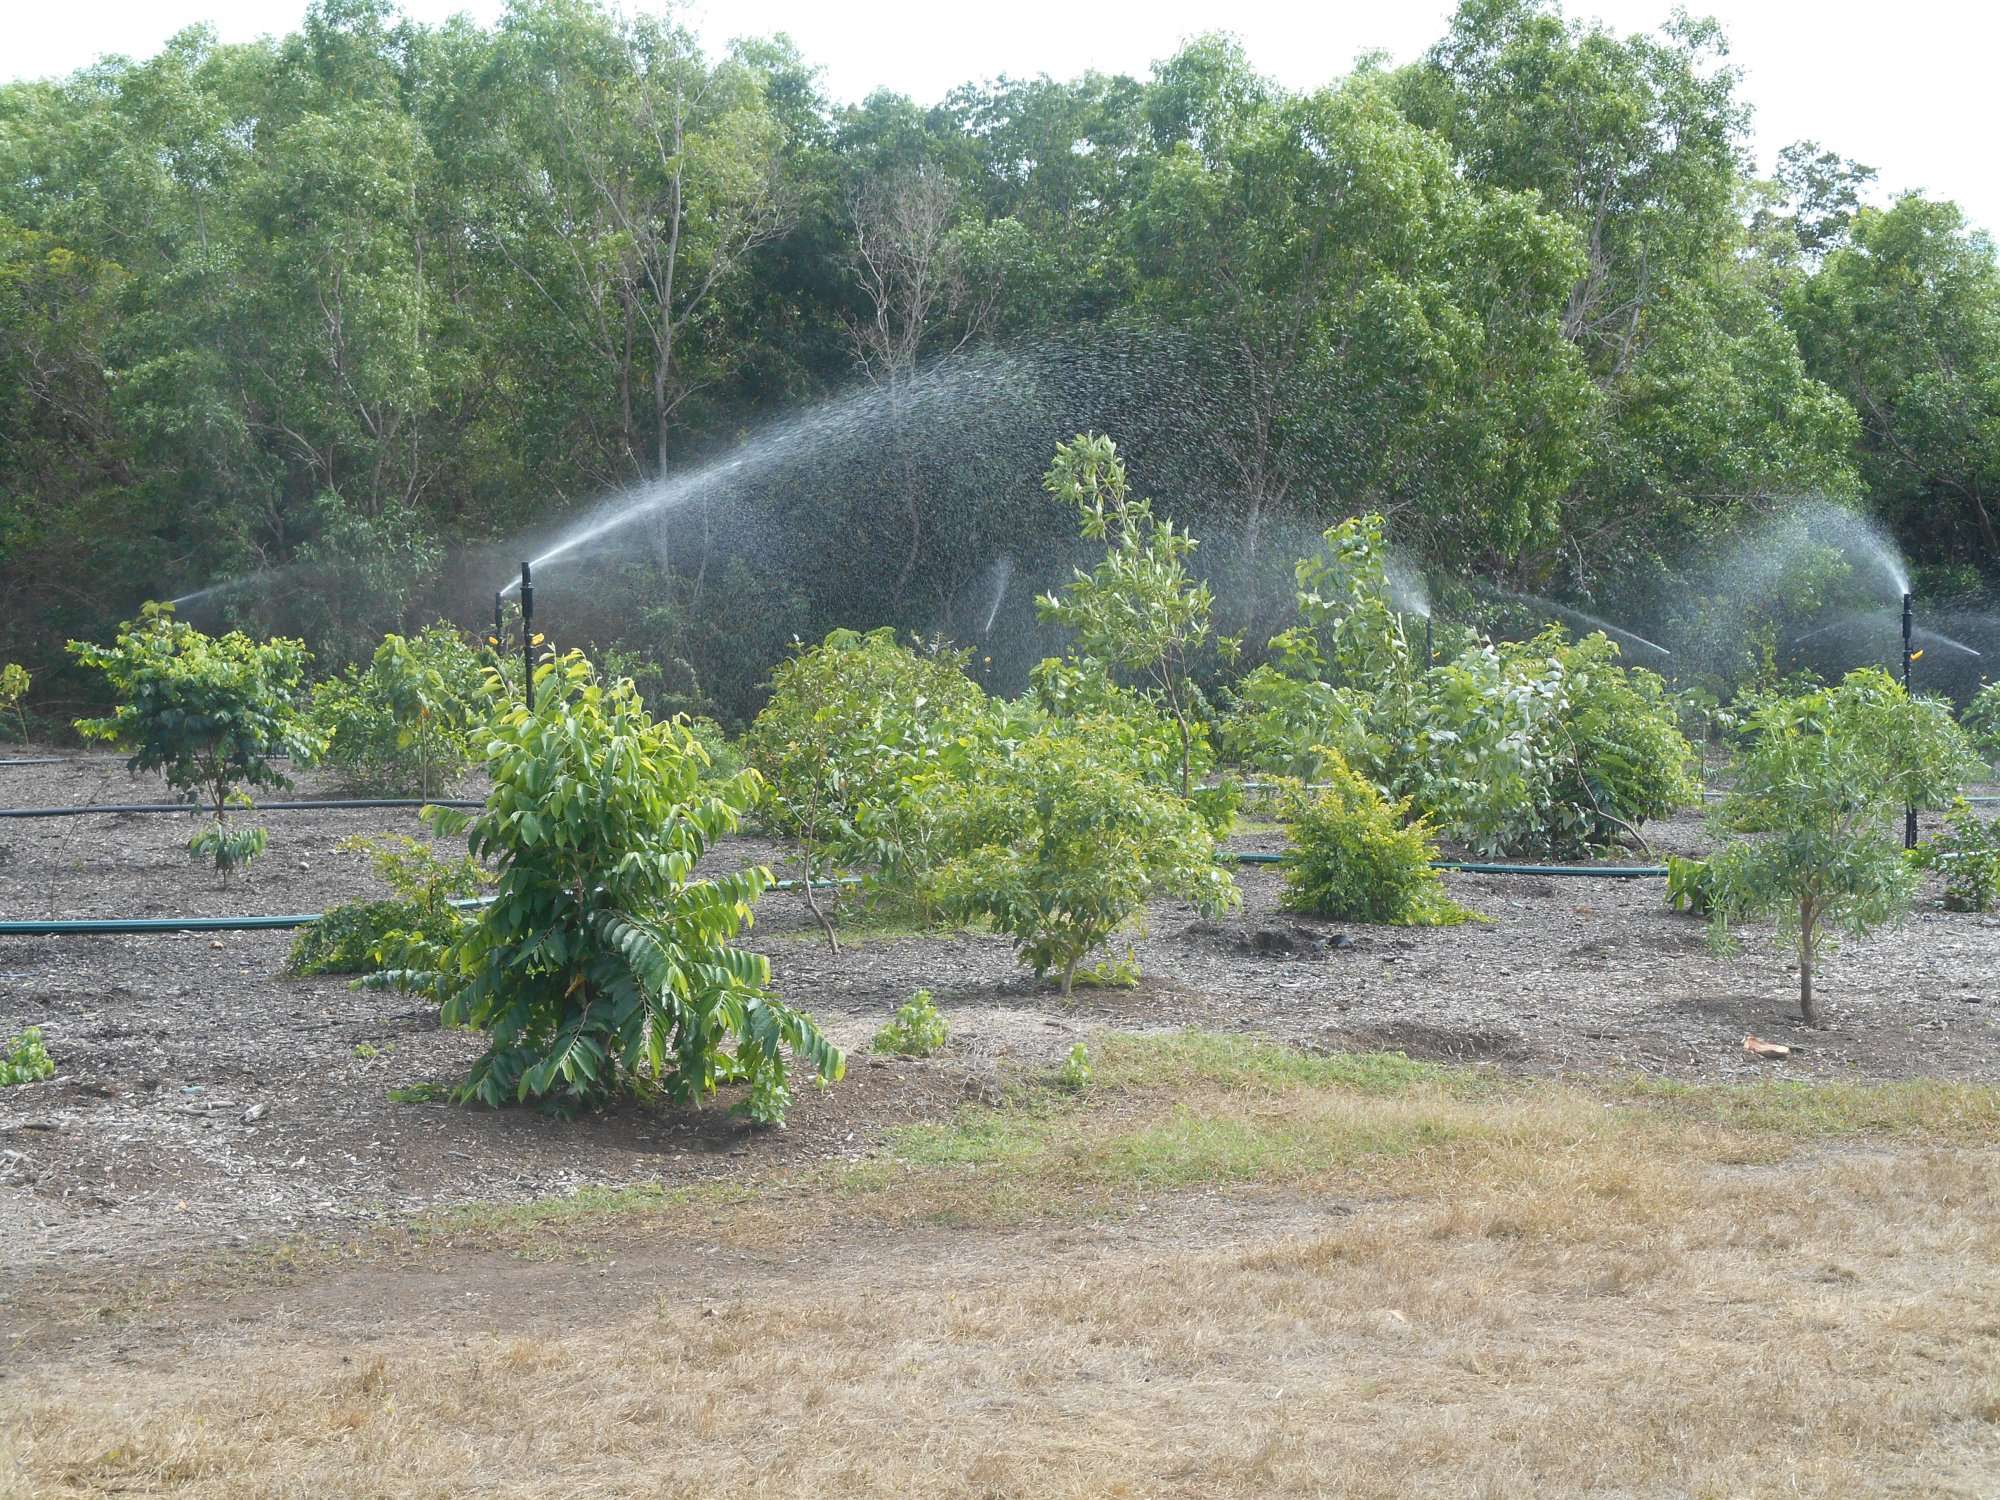 Stage 3 vegitation maturing, revegitation of monsoon rainforest at East Point Reserve